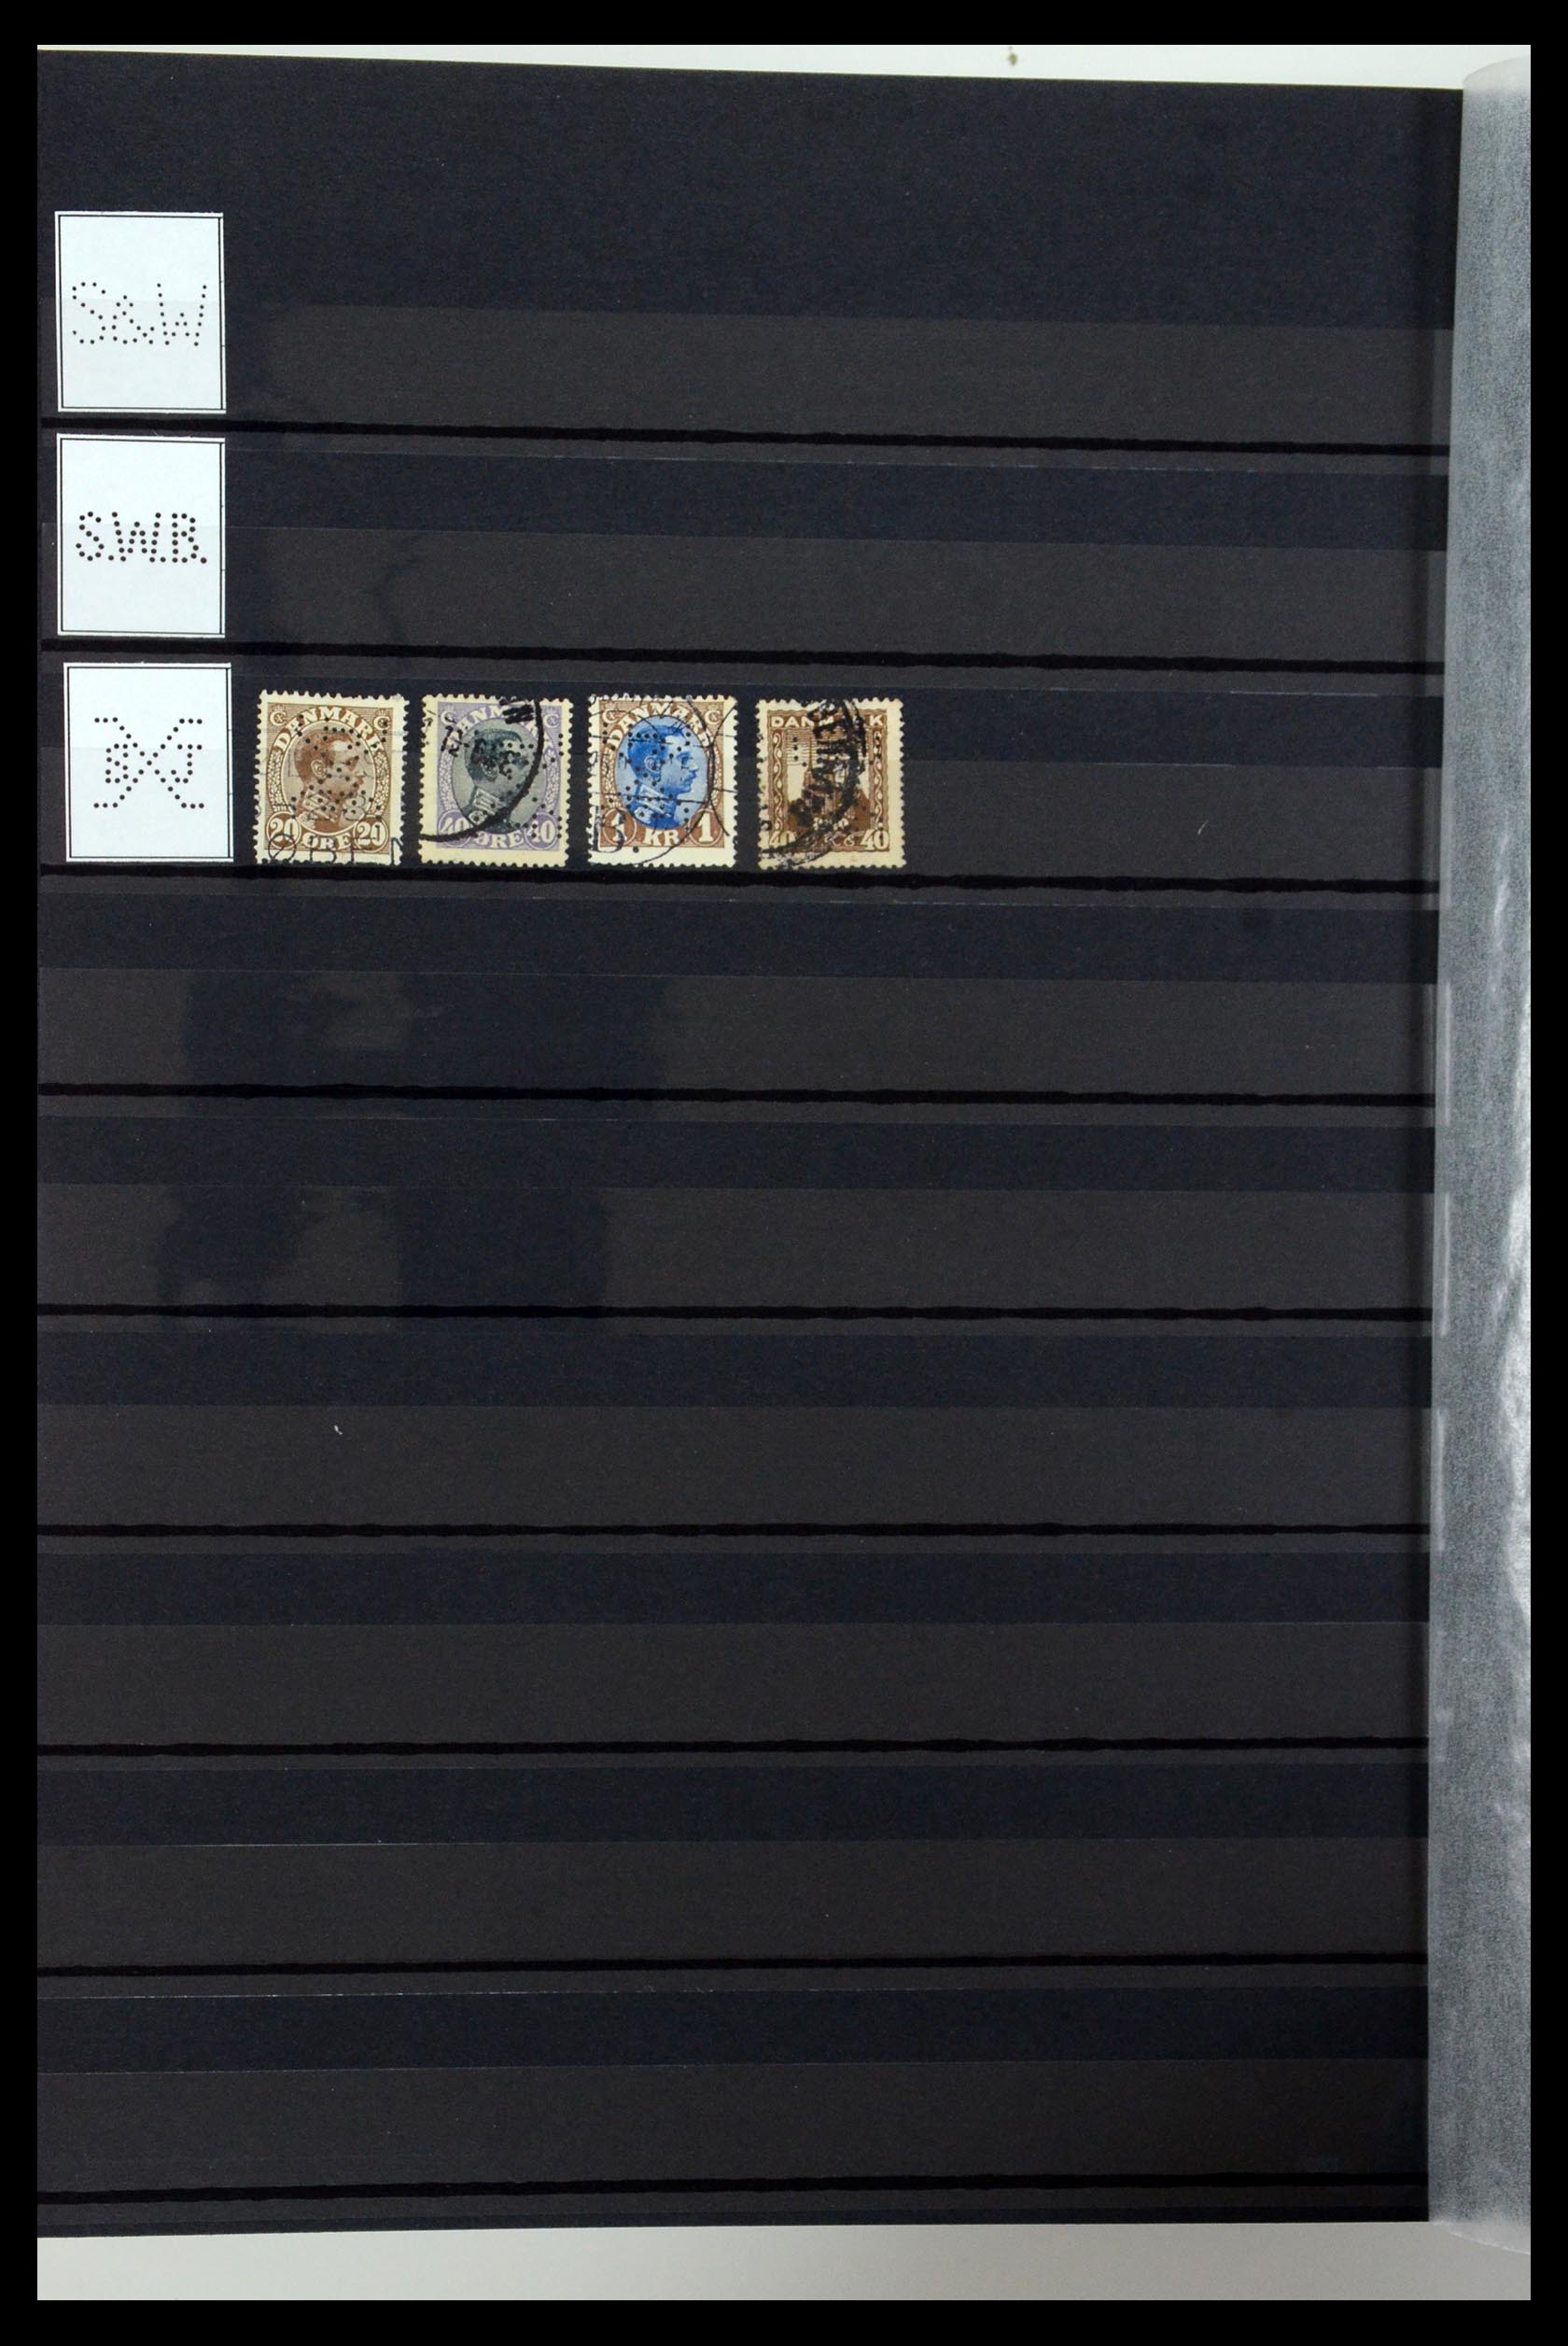 36396 212 - Stamp collection 36396 Denmark perfins.